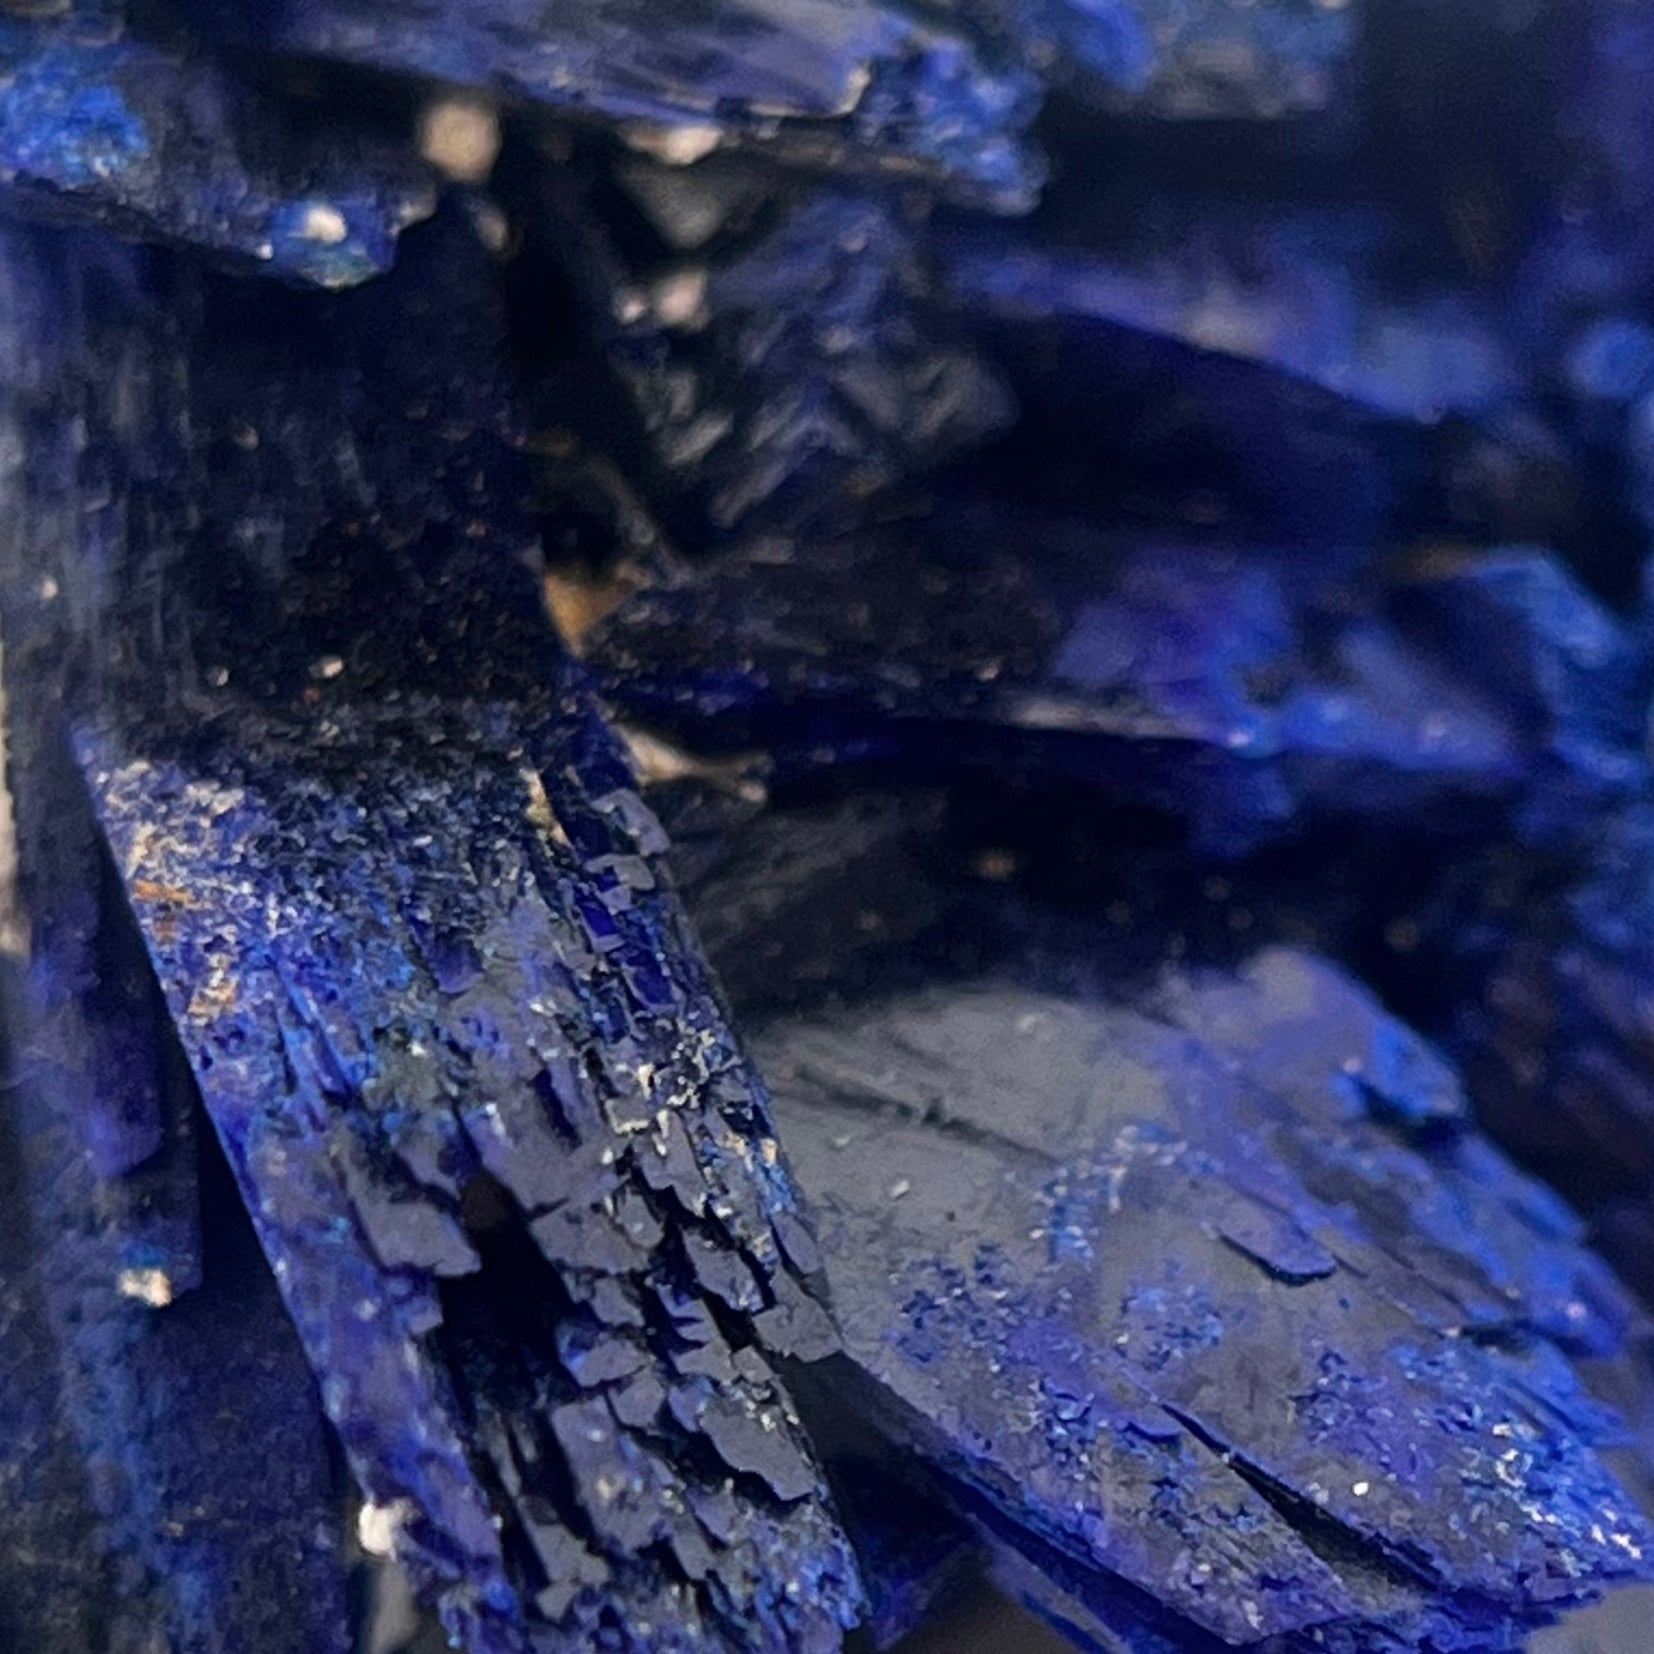 Blue Azurite Crystal